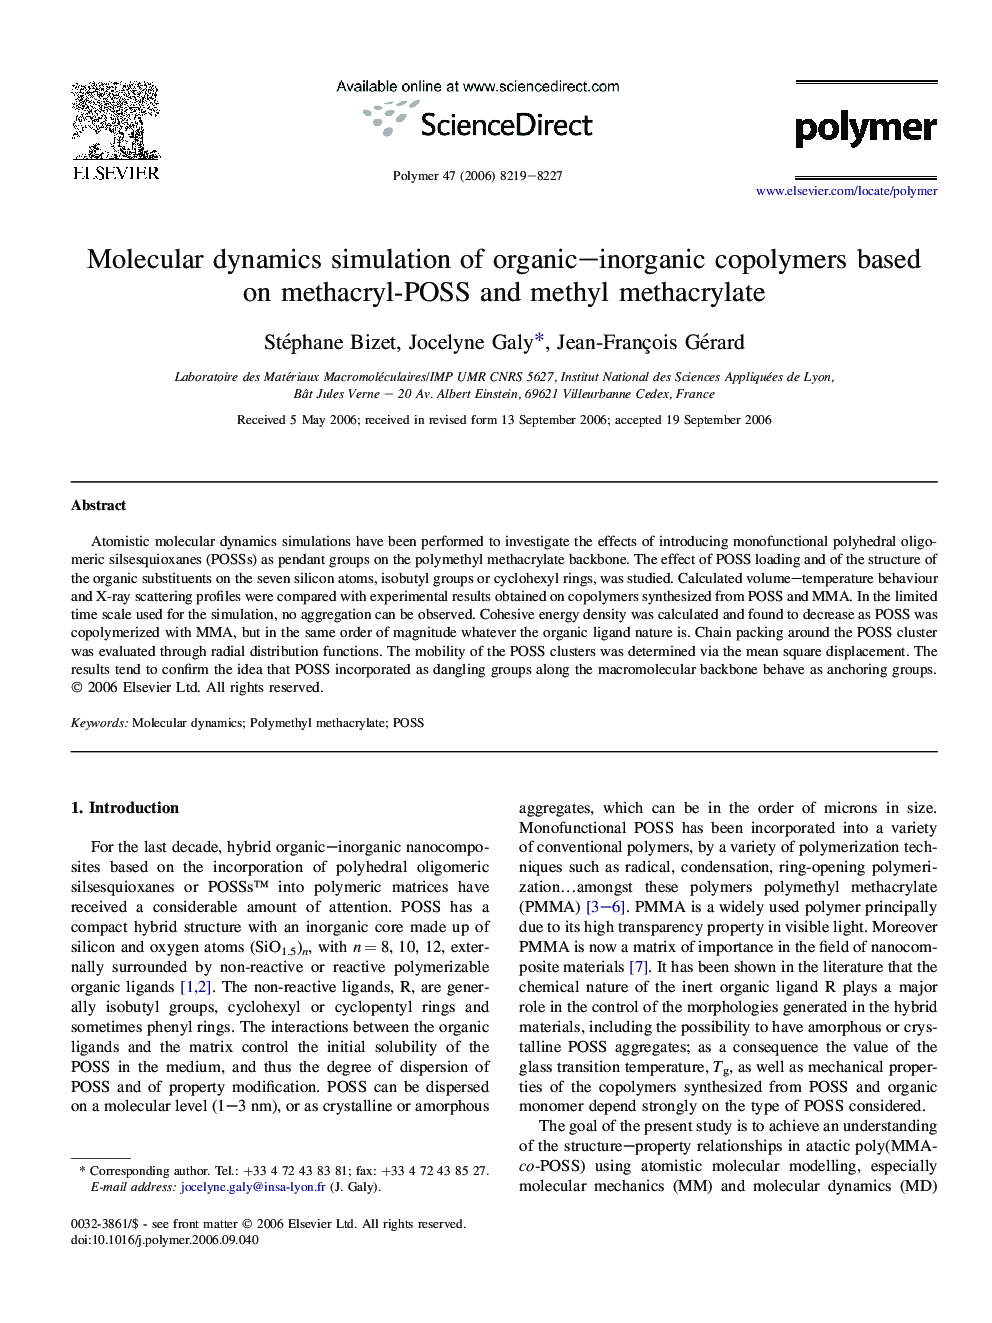 Molecular dynamics simulation of organic-inorganic copolymers based on methacryl-POSS and methyl methacrylate